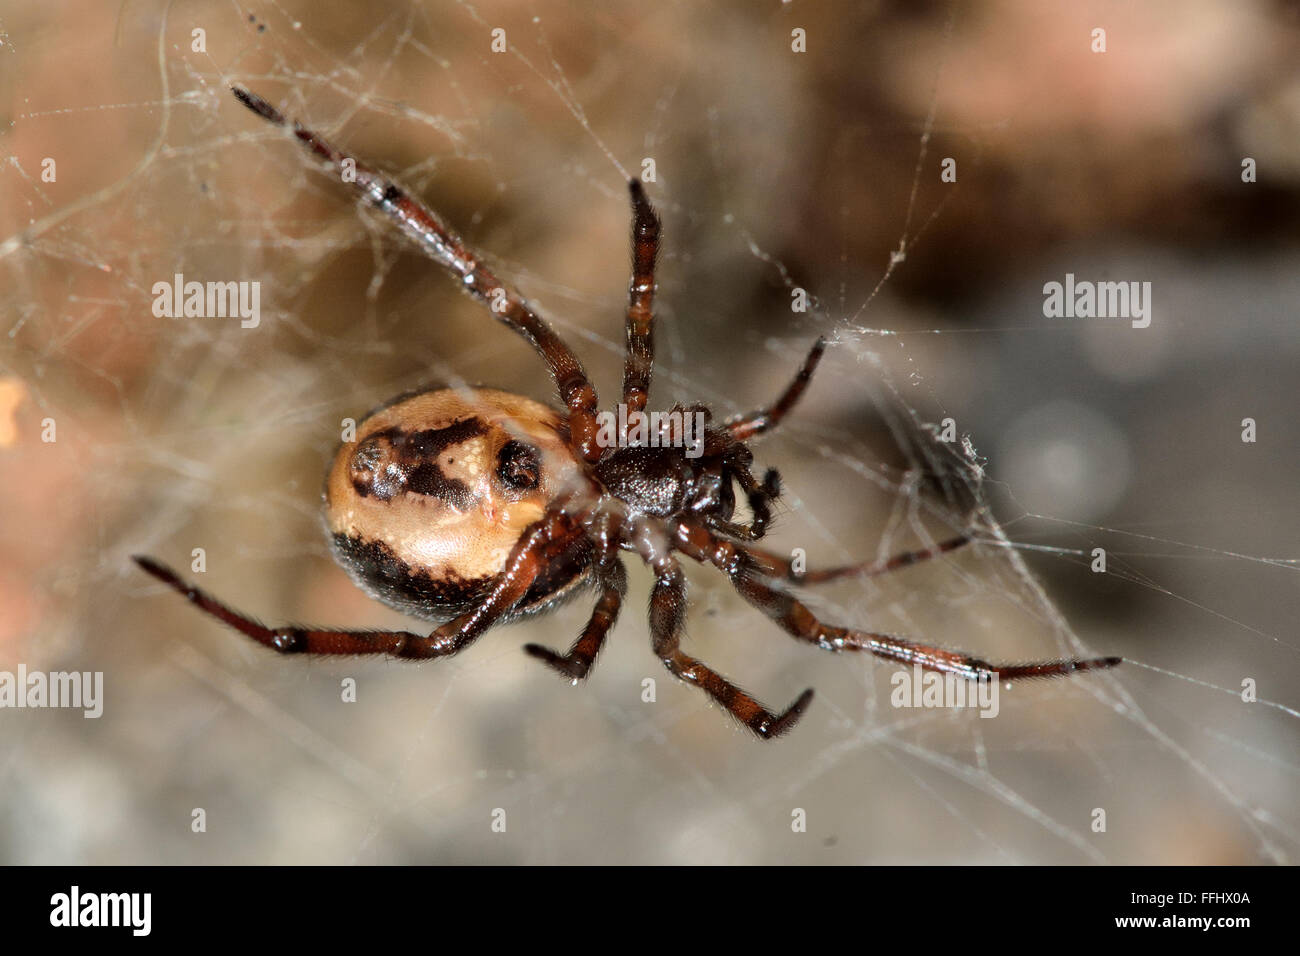 Steatoda bipunctata mostrando femmina epigyne. Un ragno femmina nella famiglia Theridiidae, mostrando femmina apertura riproduttiva Foto Stock